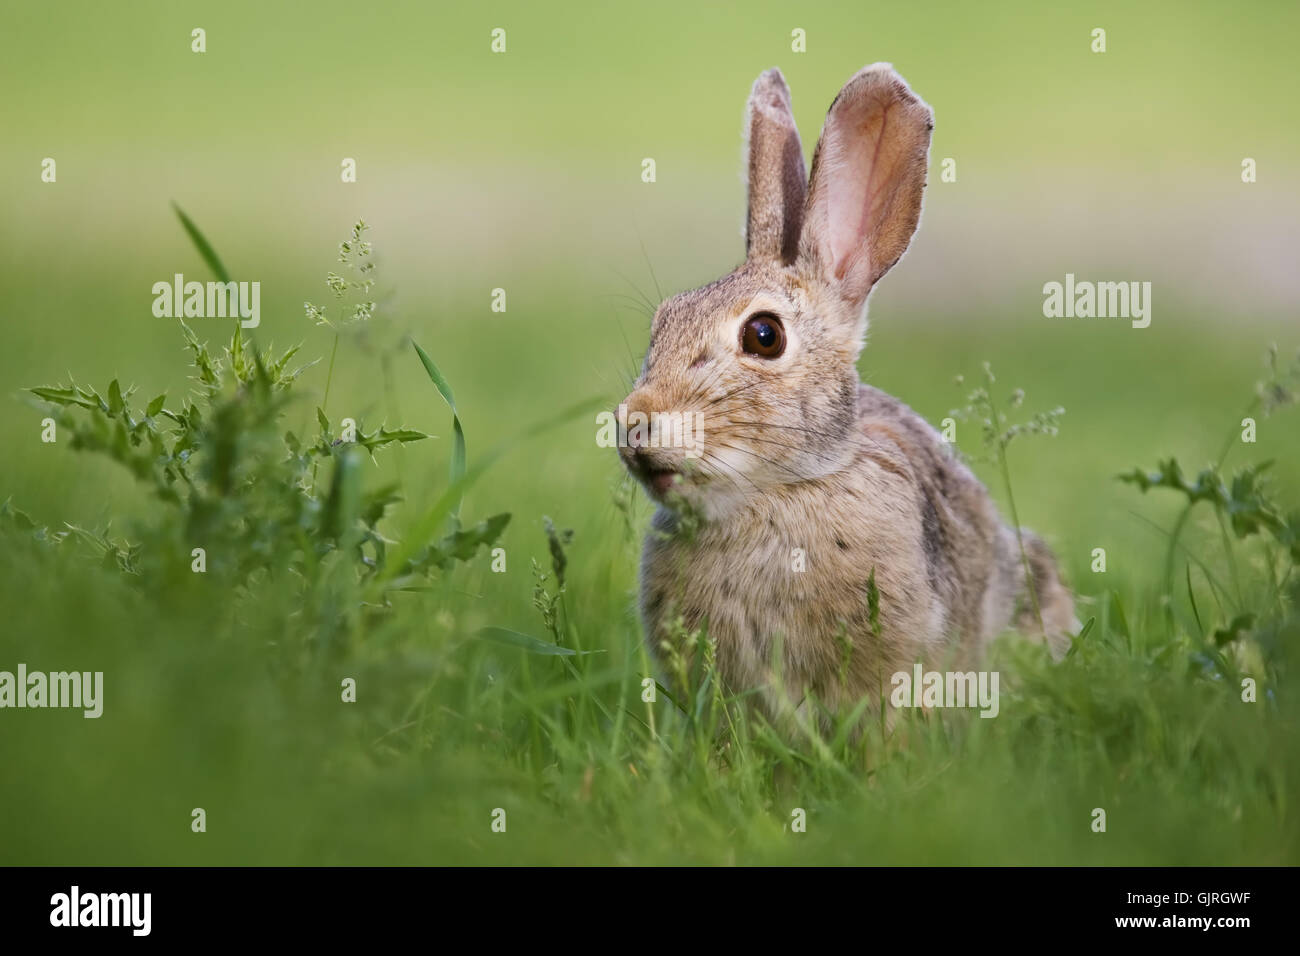 Lapins bunny rabbit Banque D'Images